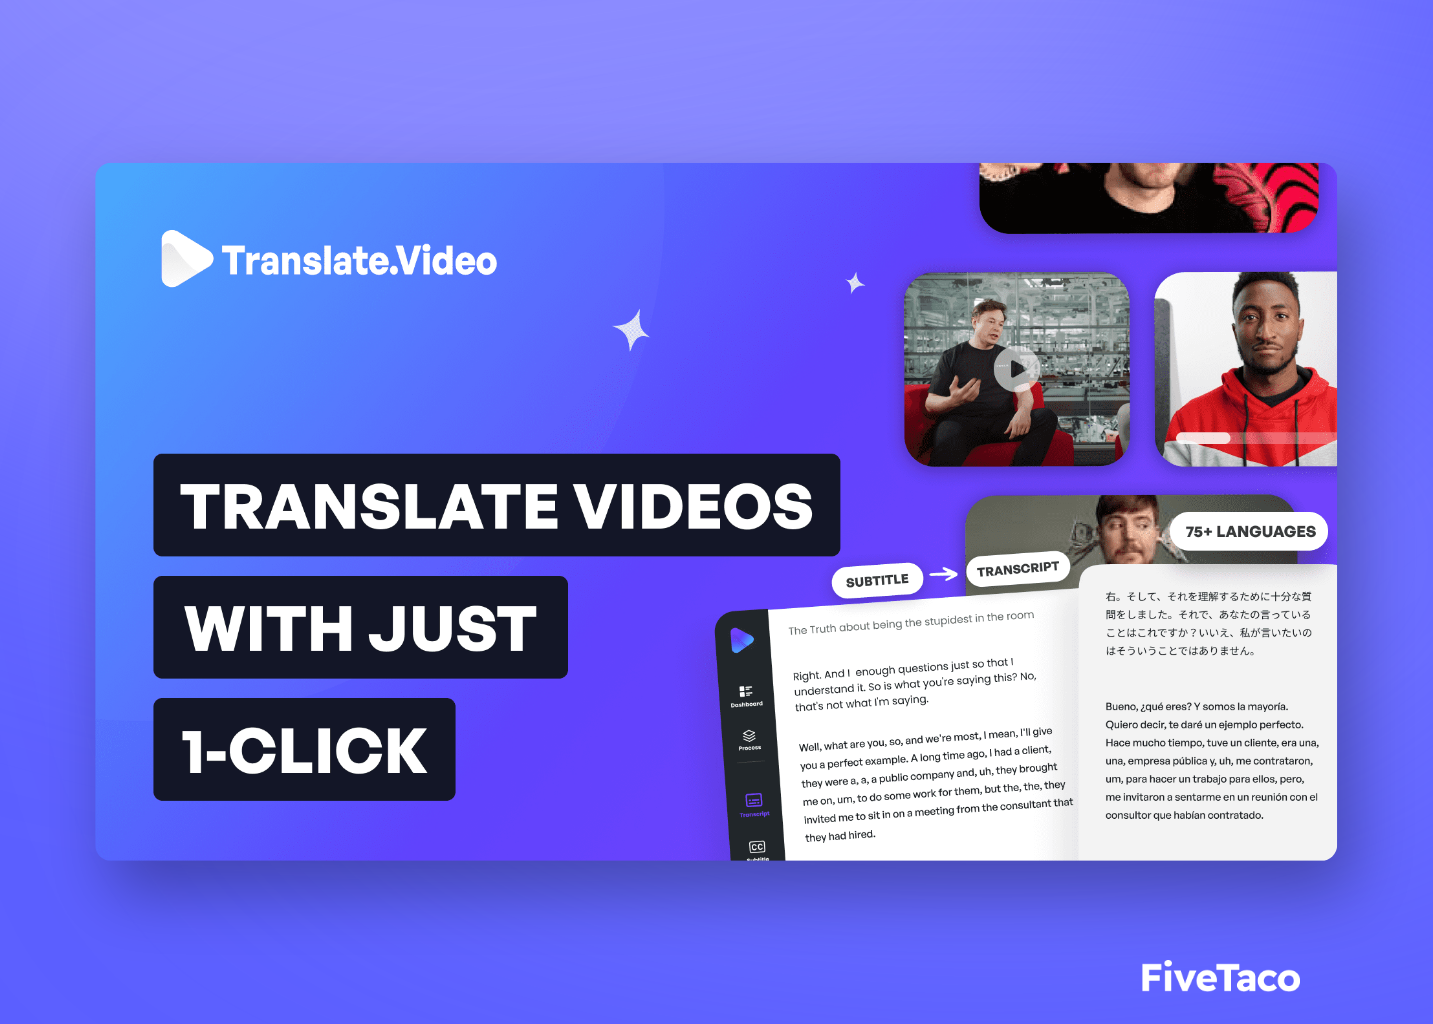 Translate.Video